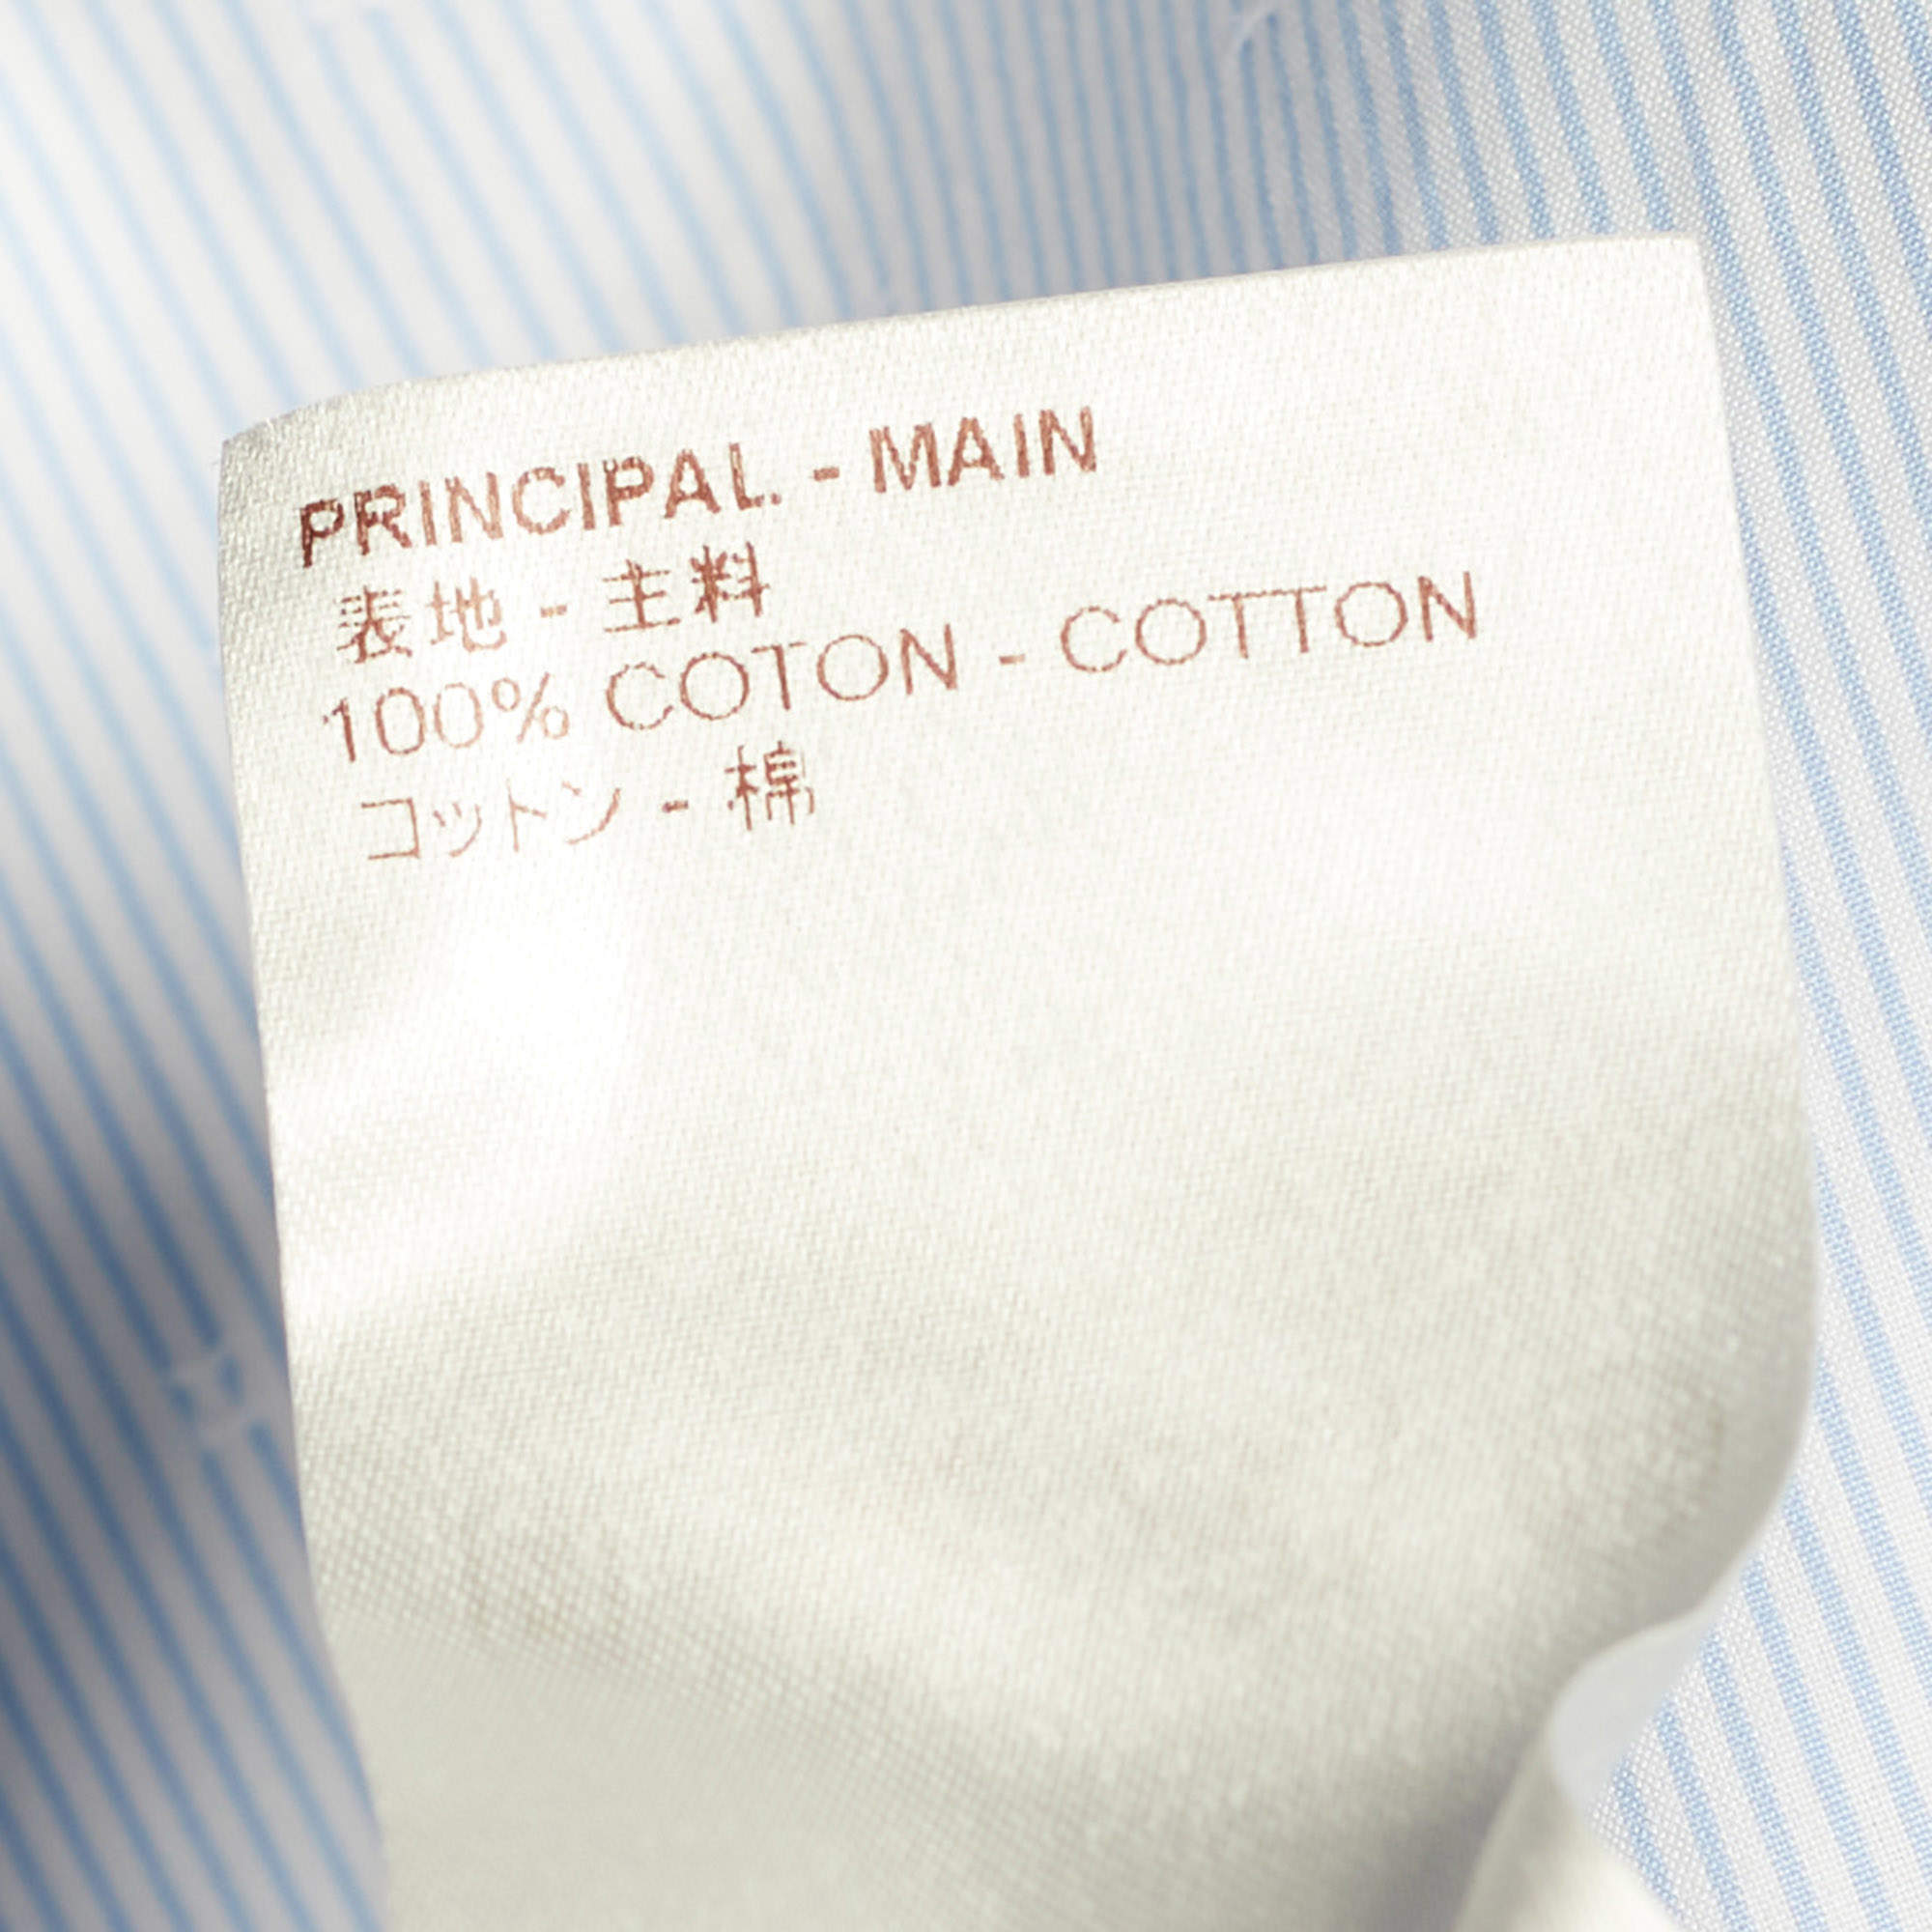 Louis Vuitton Blue Monogram Pattern Striped Cotton Long Sleeve